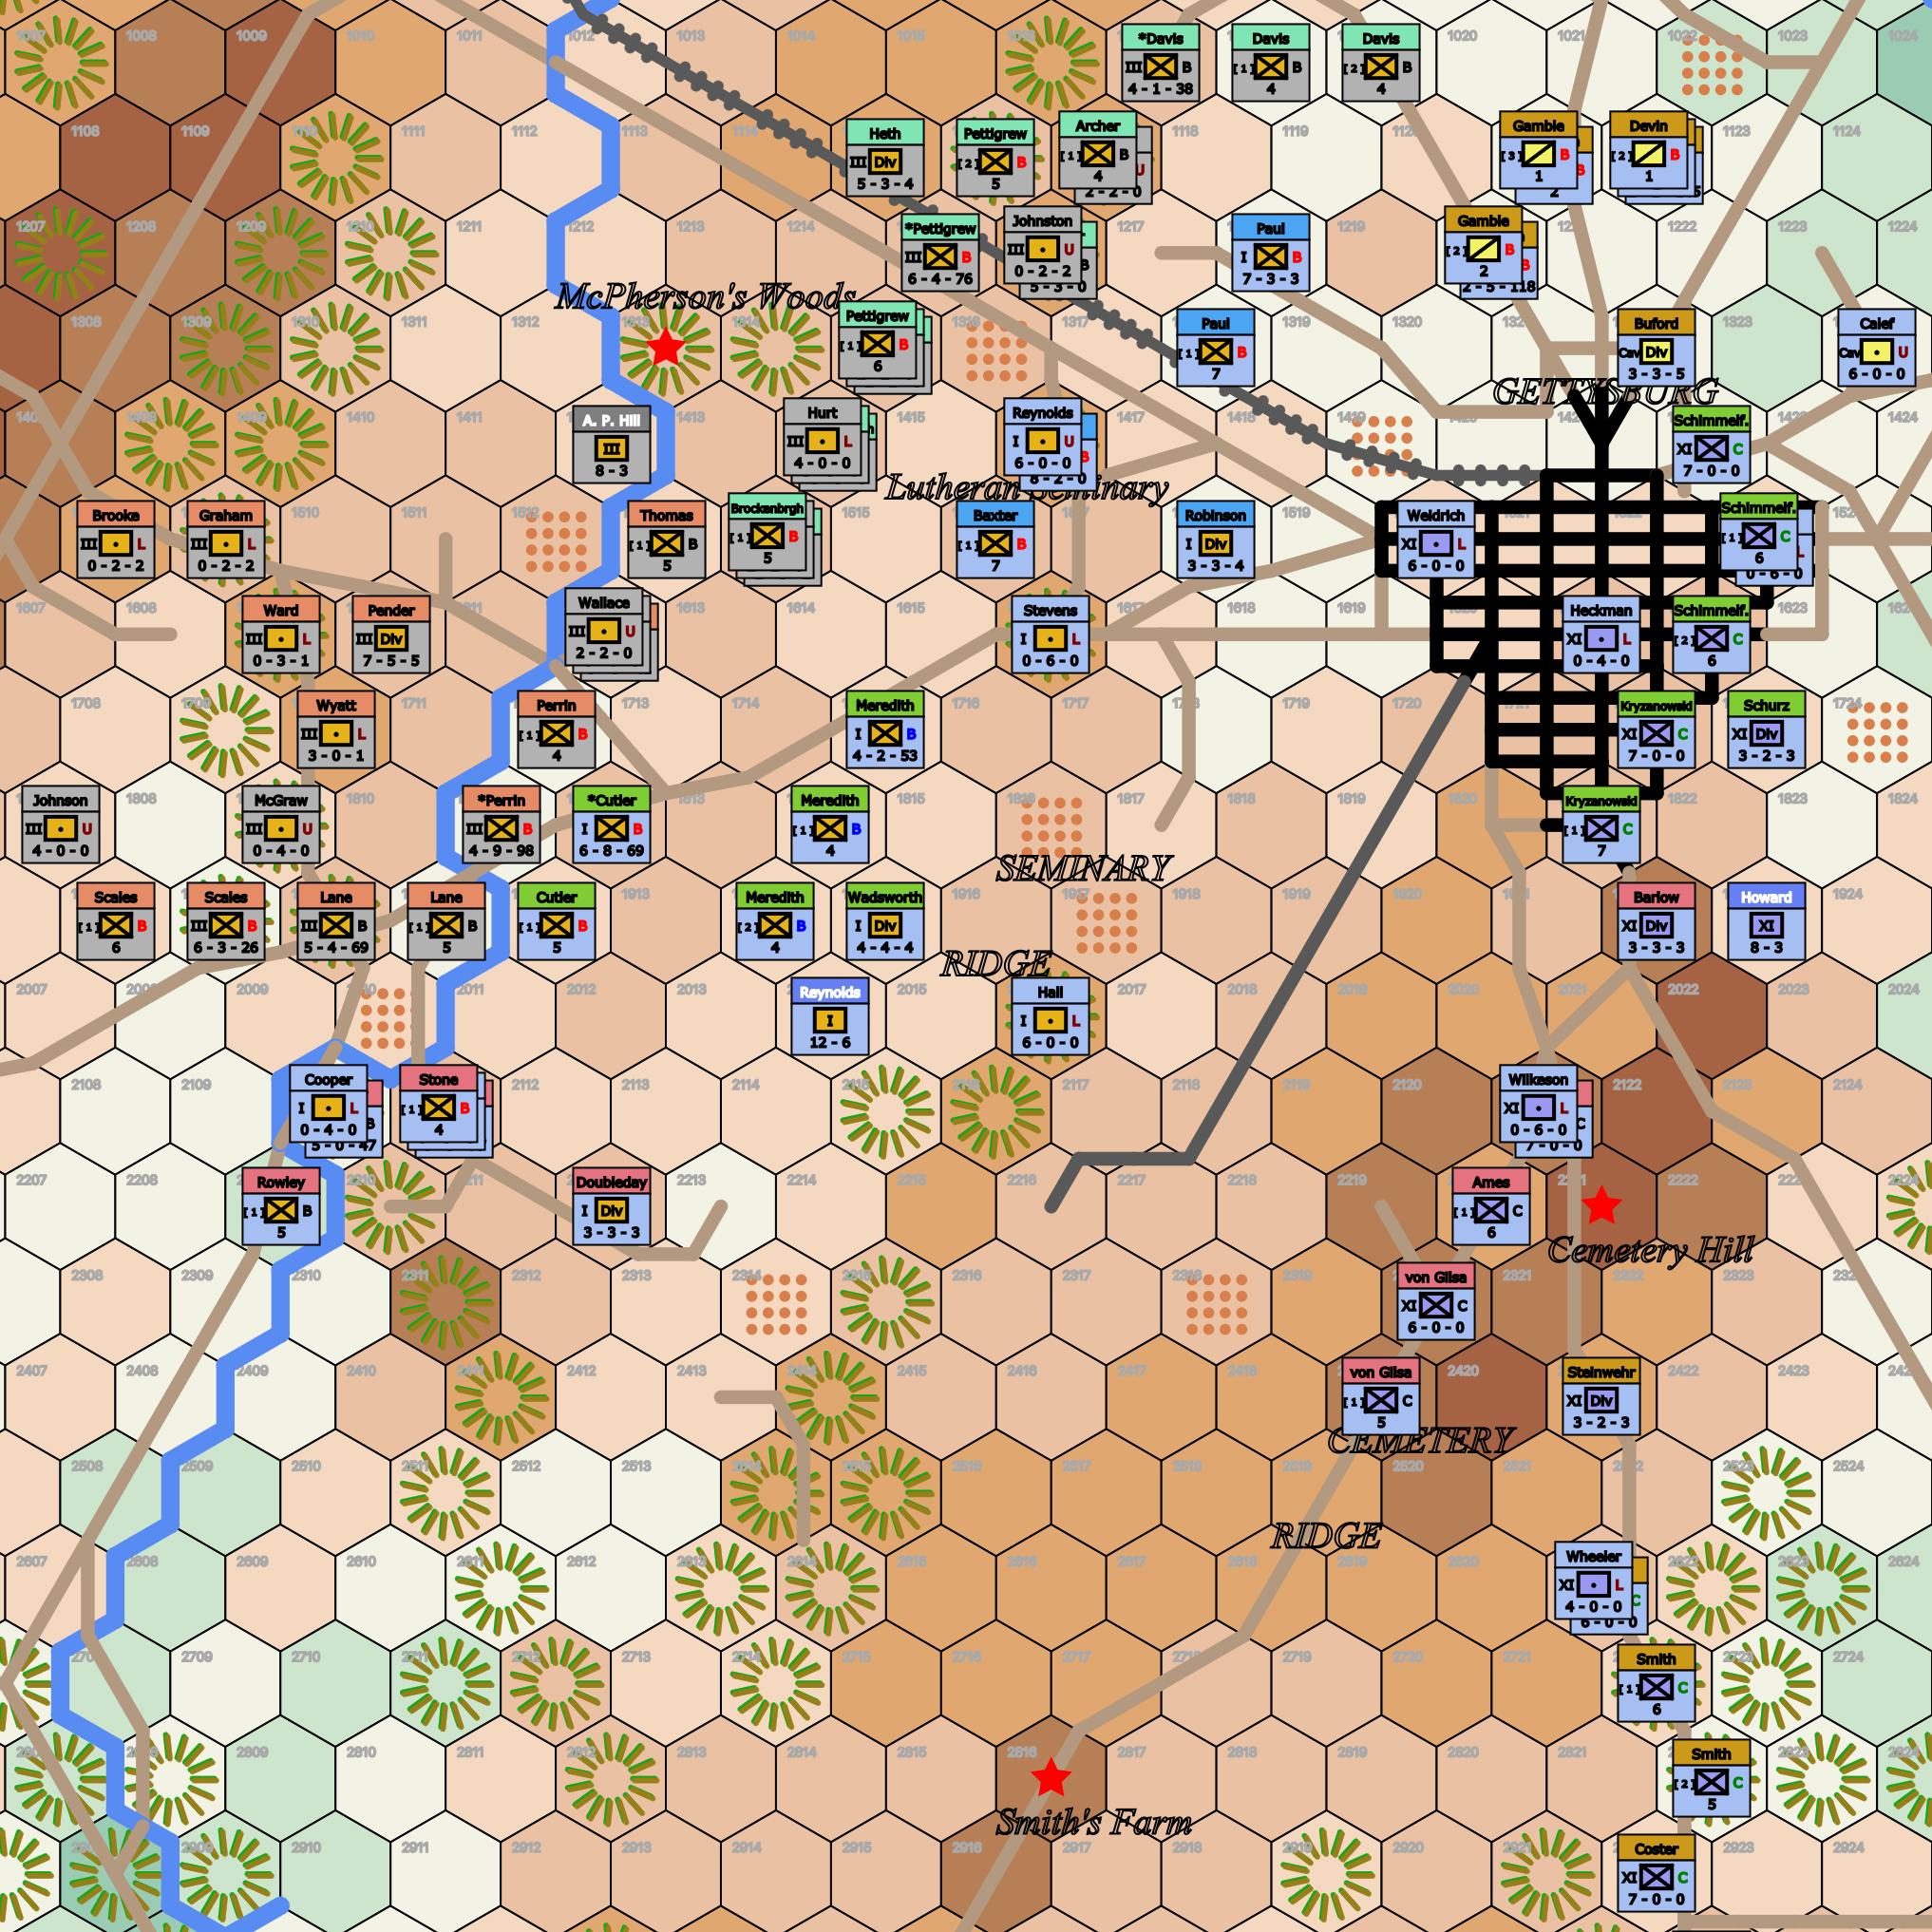 Gettysburg: Fields of Valor sample game map excerpt